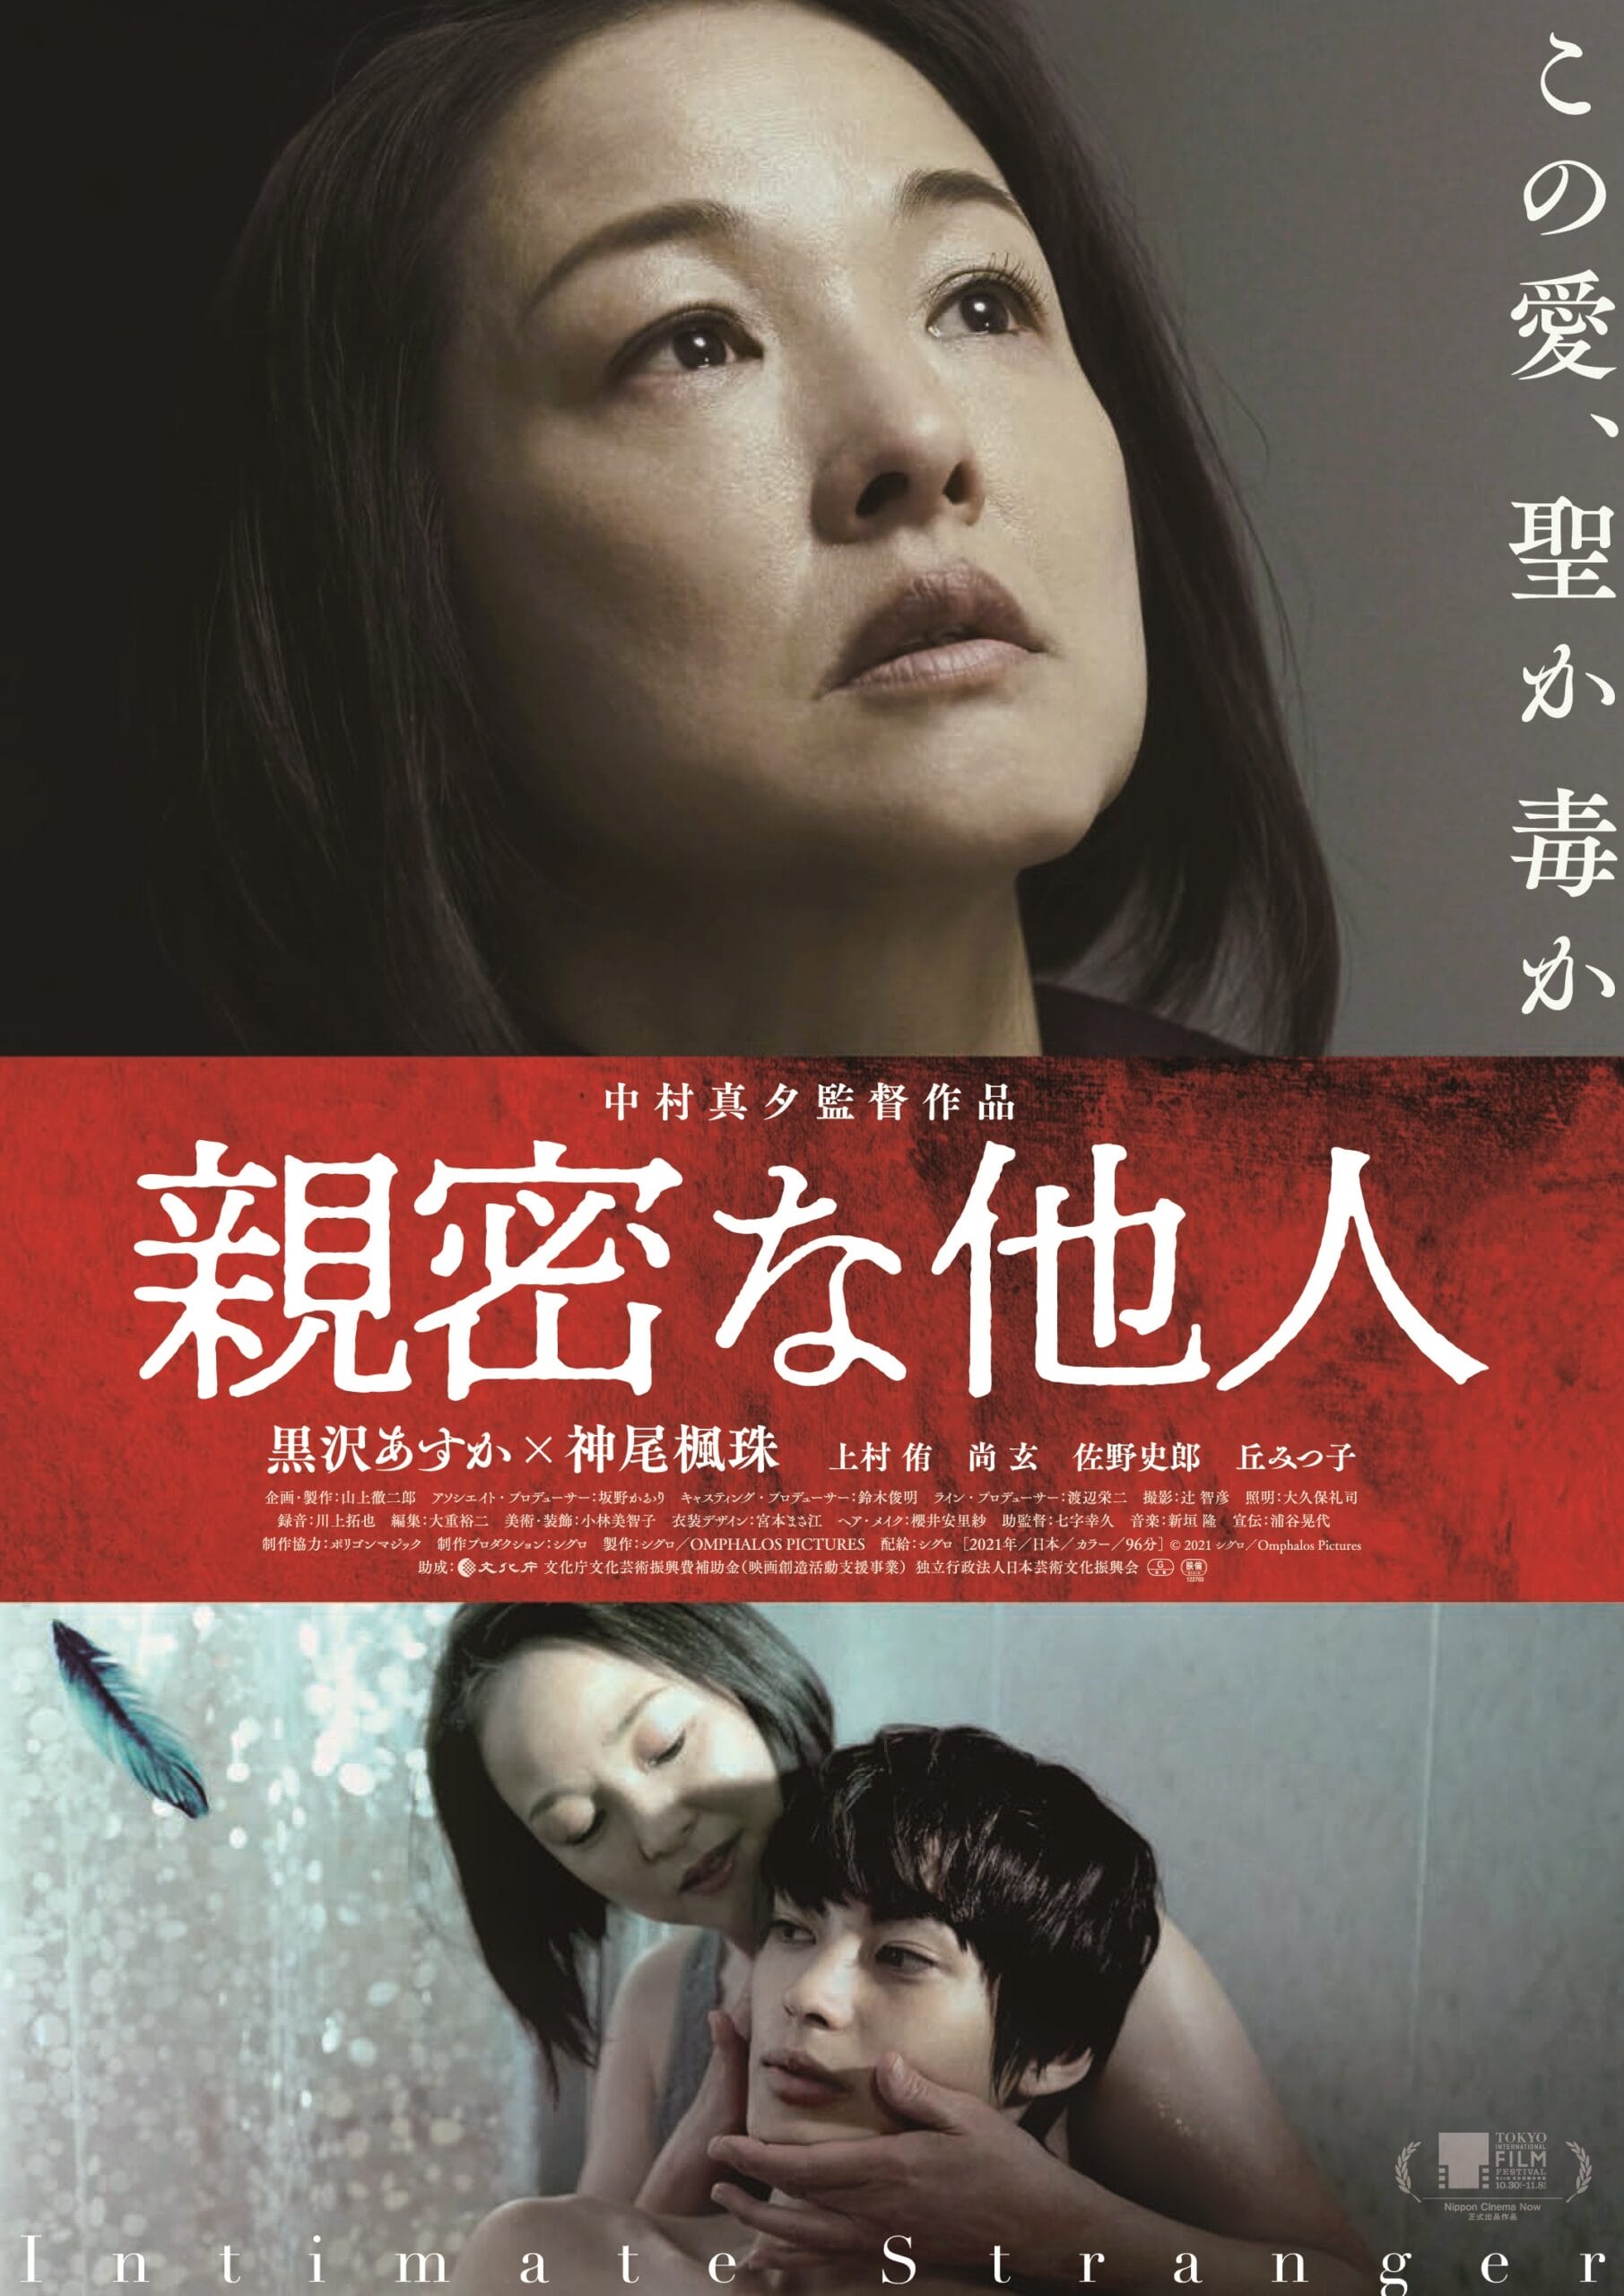 第七藝術劇場にて、中村真⼣監督『親密な他人』上映。| paperC